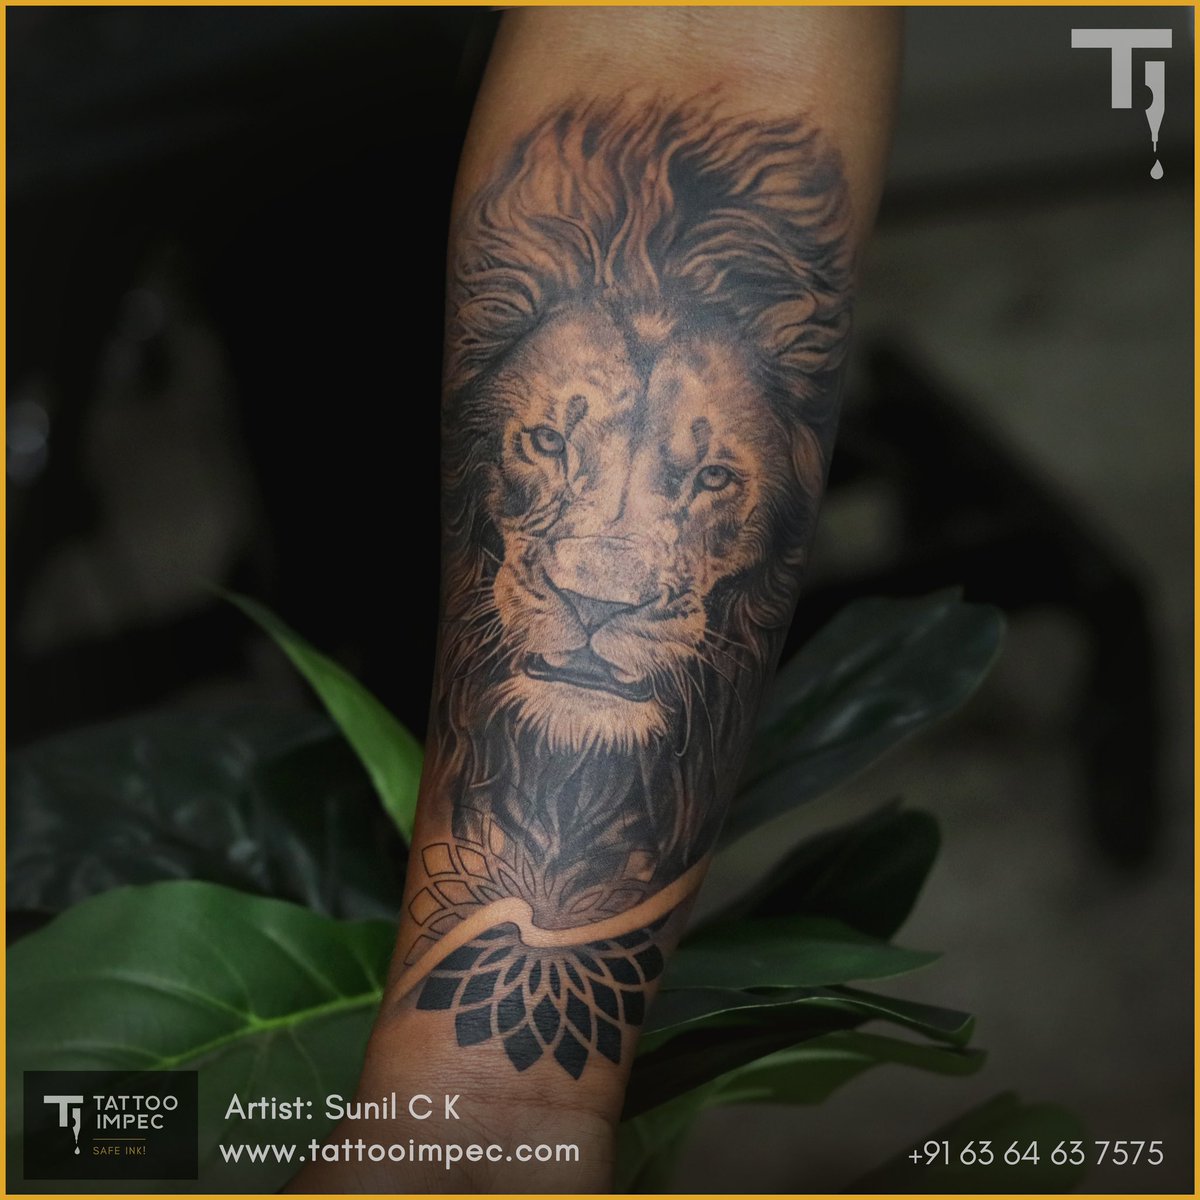 Lion Tattoo
.
#liontattoo#lion#kingofthejungle#untamed#lionking#lion#realistic#realism#realismtattoo#bigcats#handtattoo
.
#tattoo#tattooimpec#sunilck#tattoostudiomysore#tattooinmysore#instapage#foryoupage#explorepage#fypage#trending